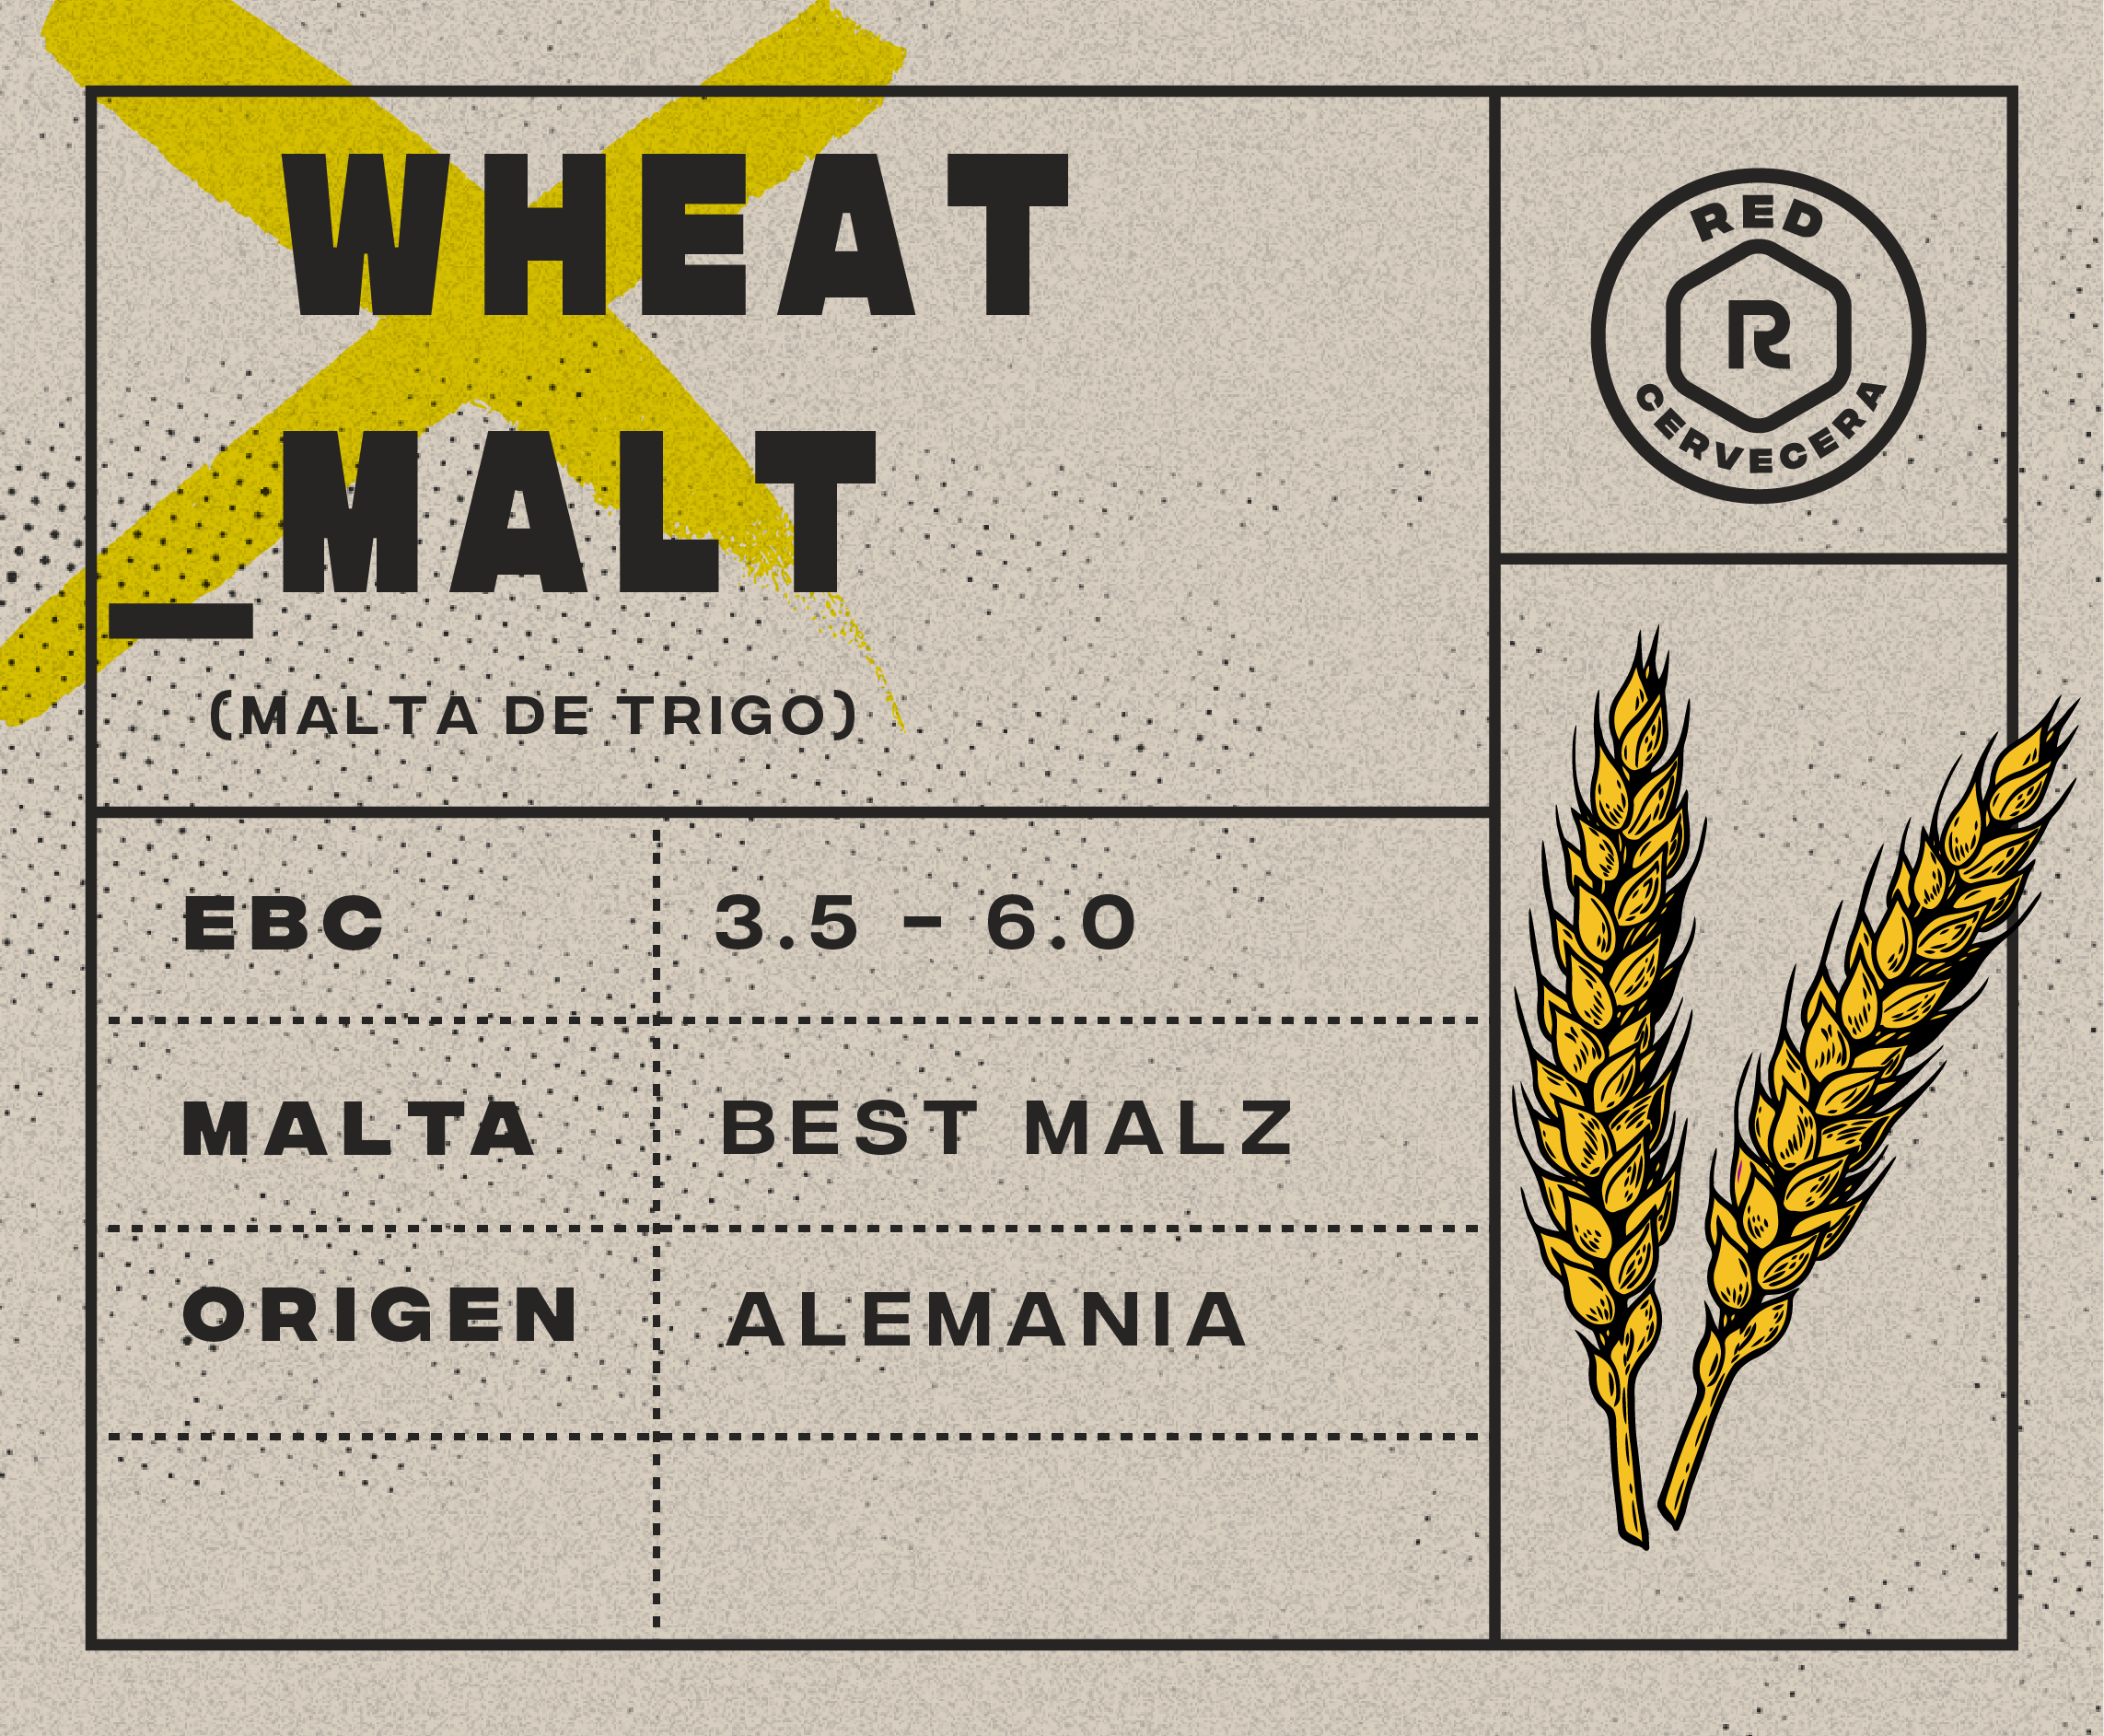 09-Wheat Malt (EBC 3.5-6.0) (1 Kg.)